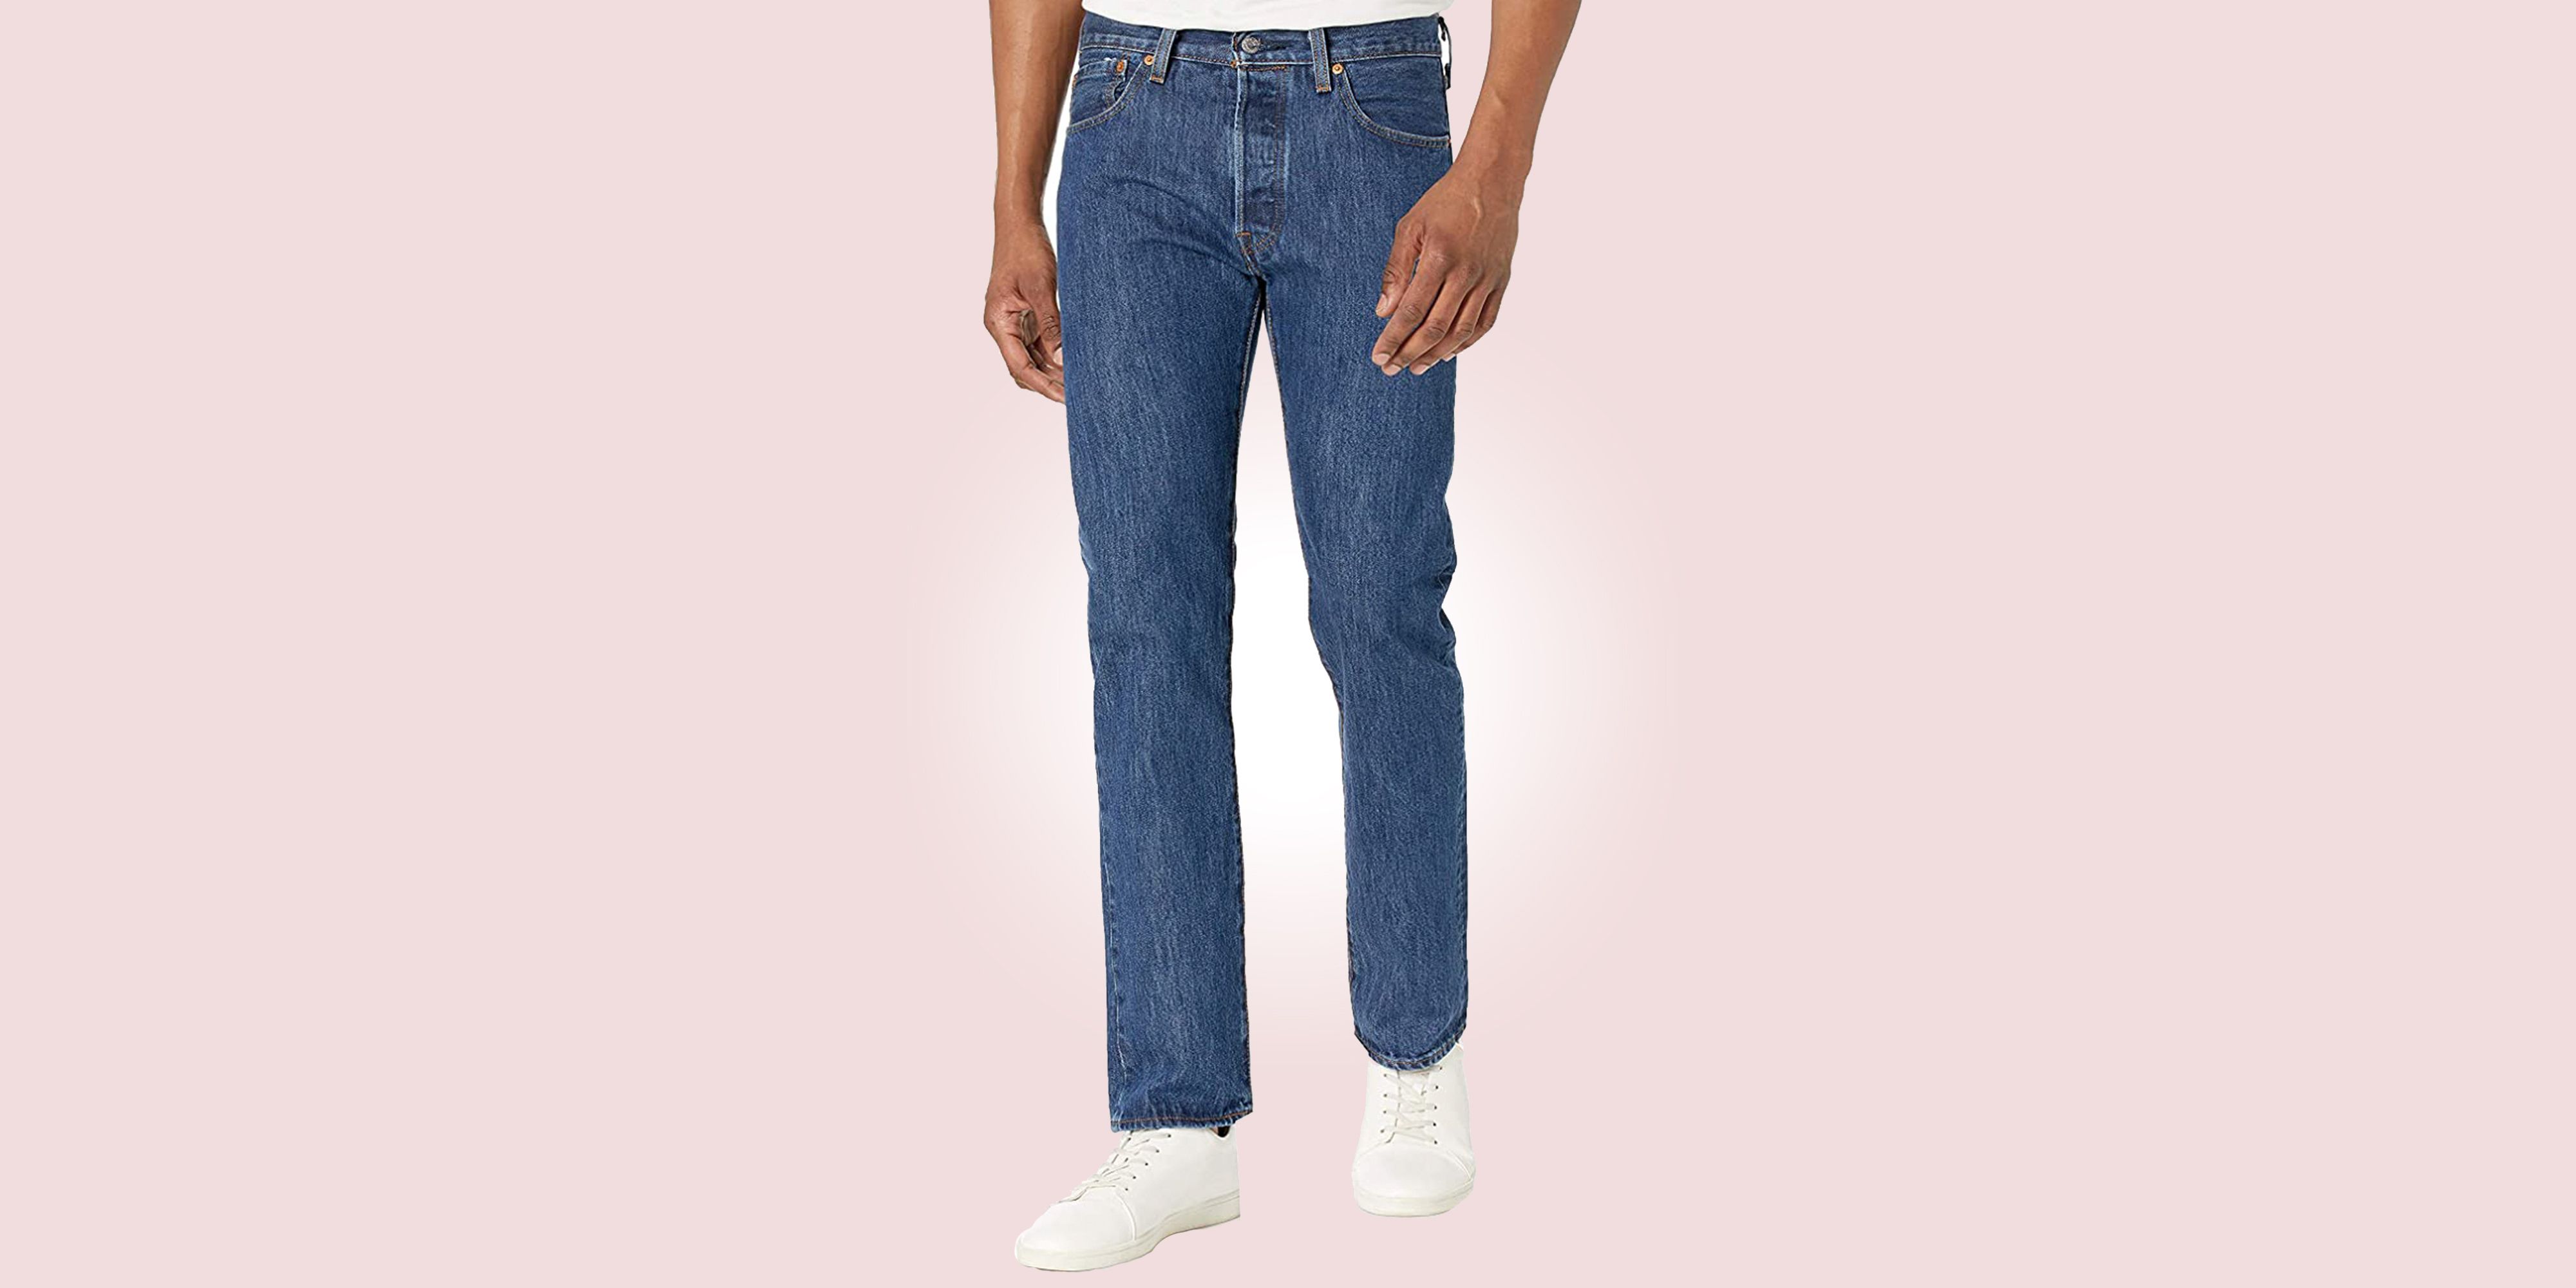 Uniqlo Quality Mens Jeans Size 29  Okmall